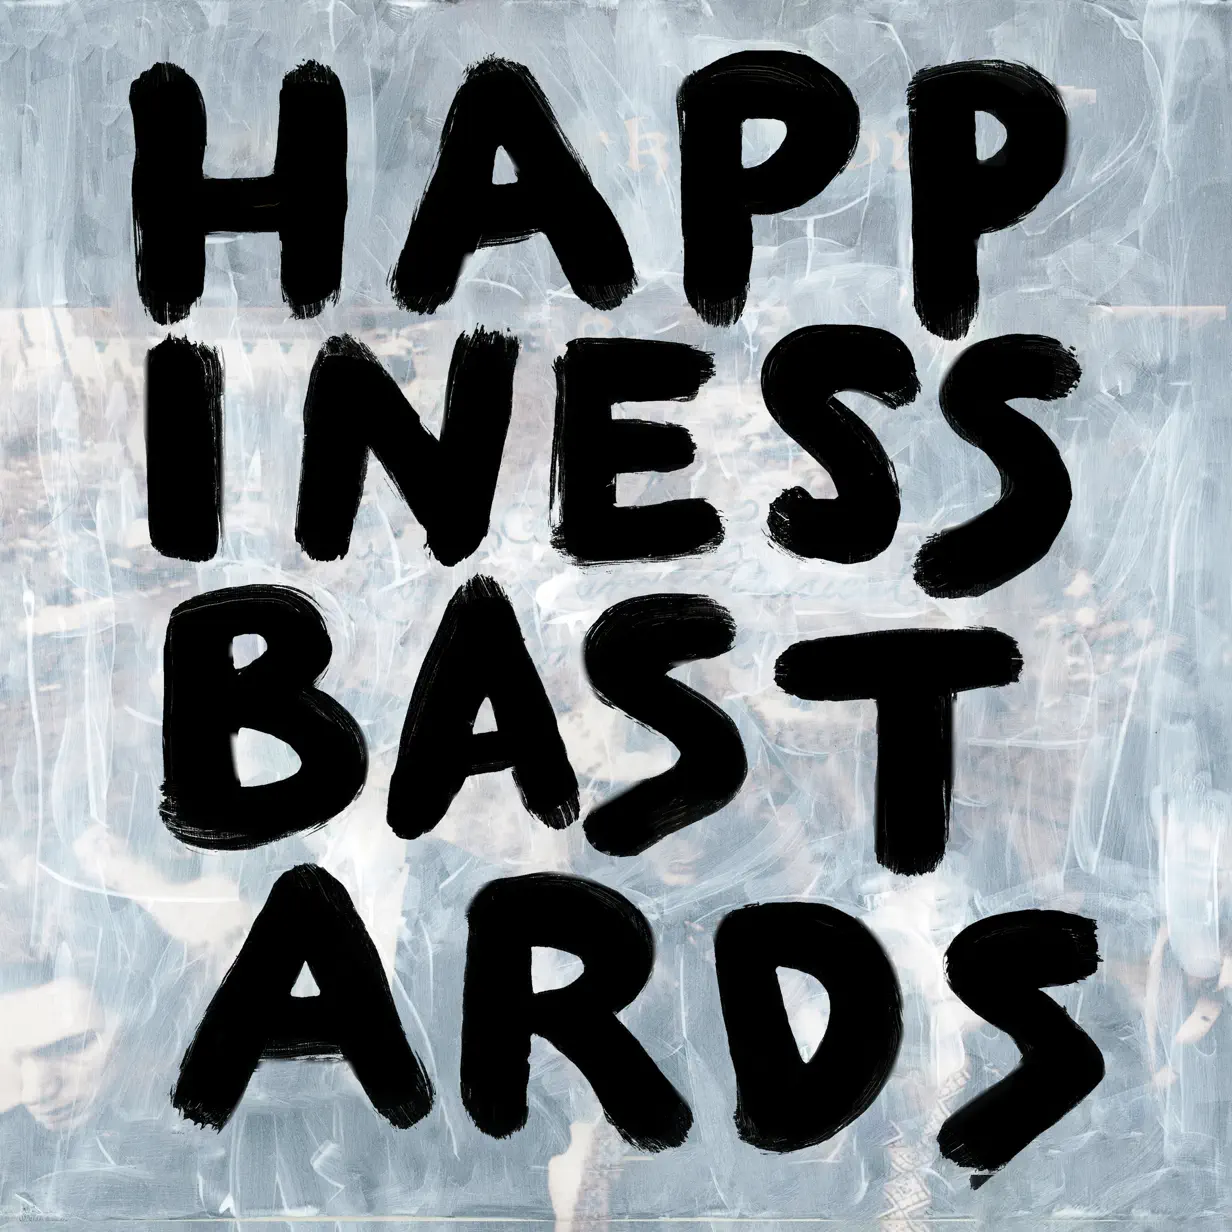 The Black Crowes‘ “Happiness Bastards” Album Download Leak MP3 ZIP Files